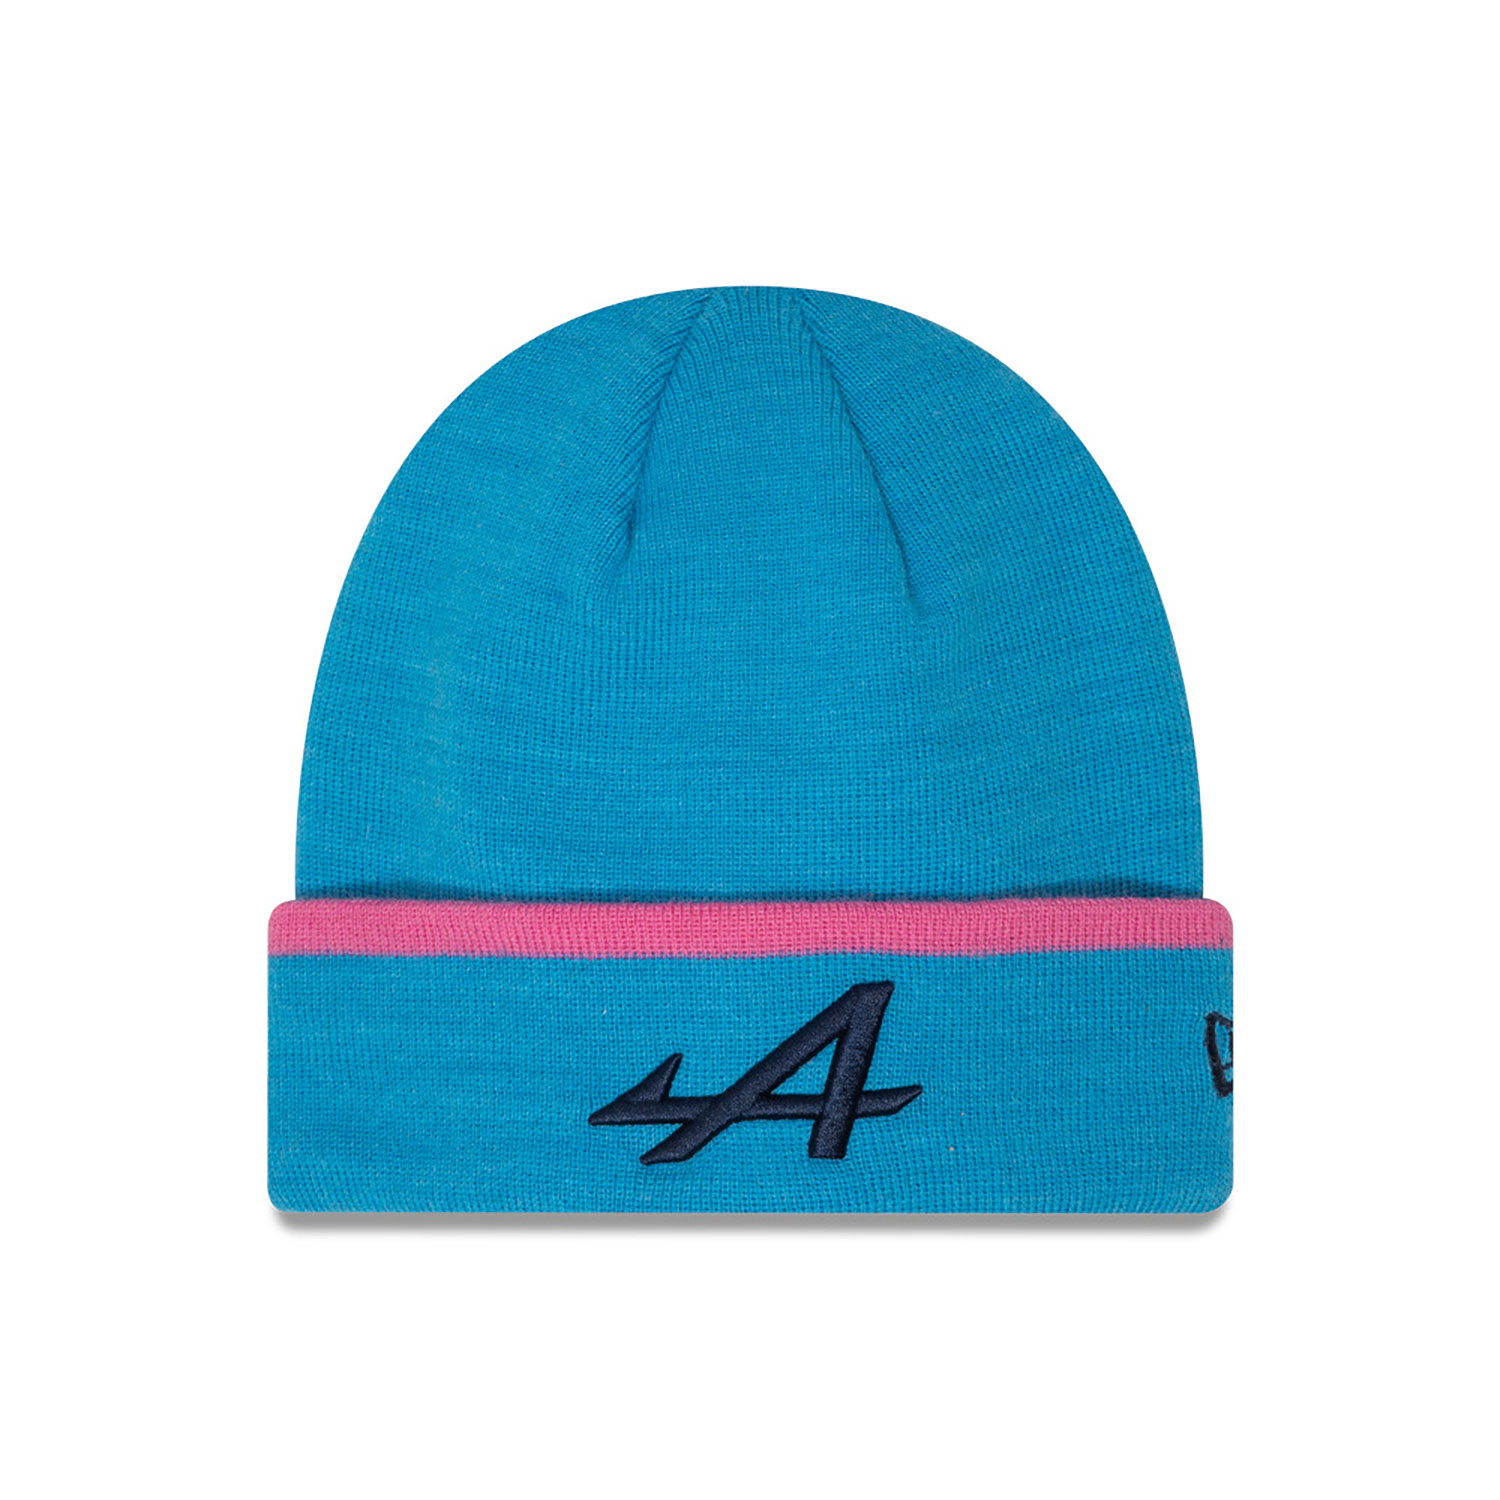 Alpine Racing Blue Polyana Cuff Knit Beanie Hat